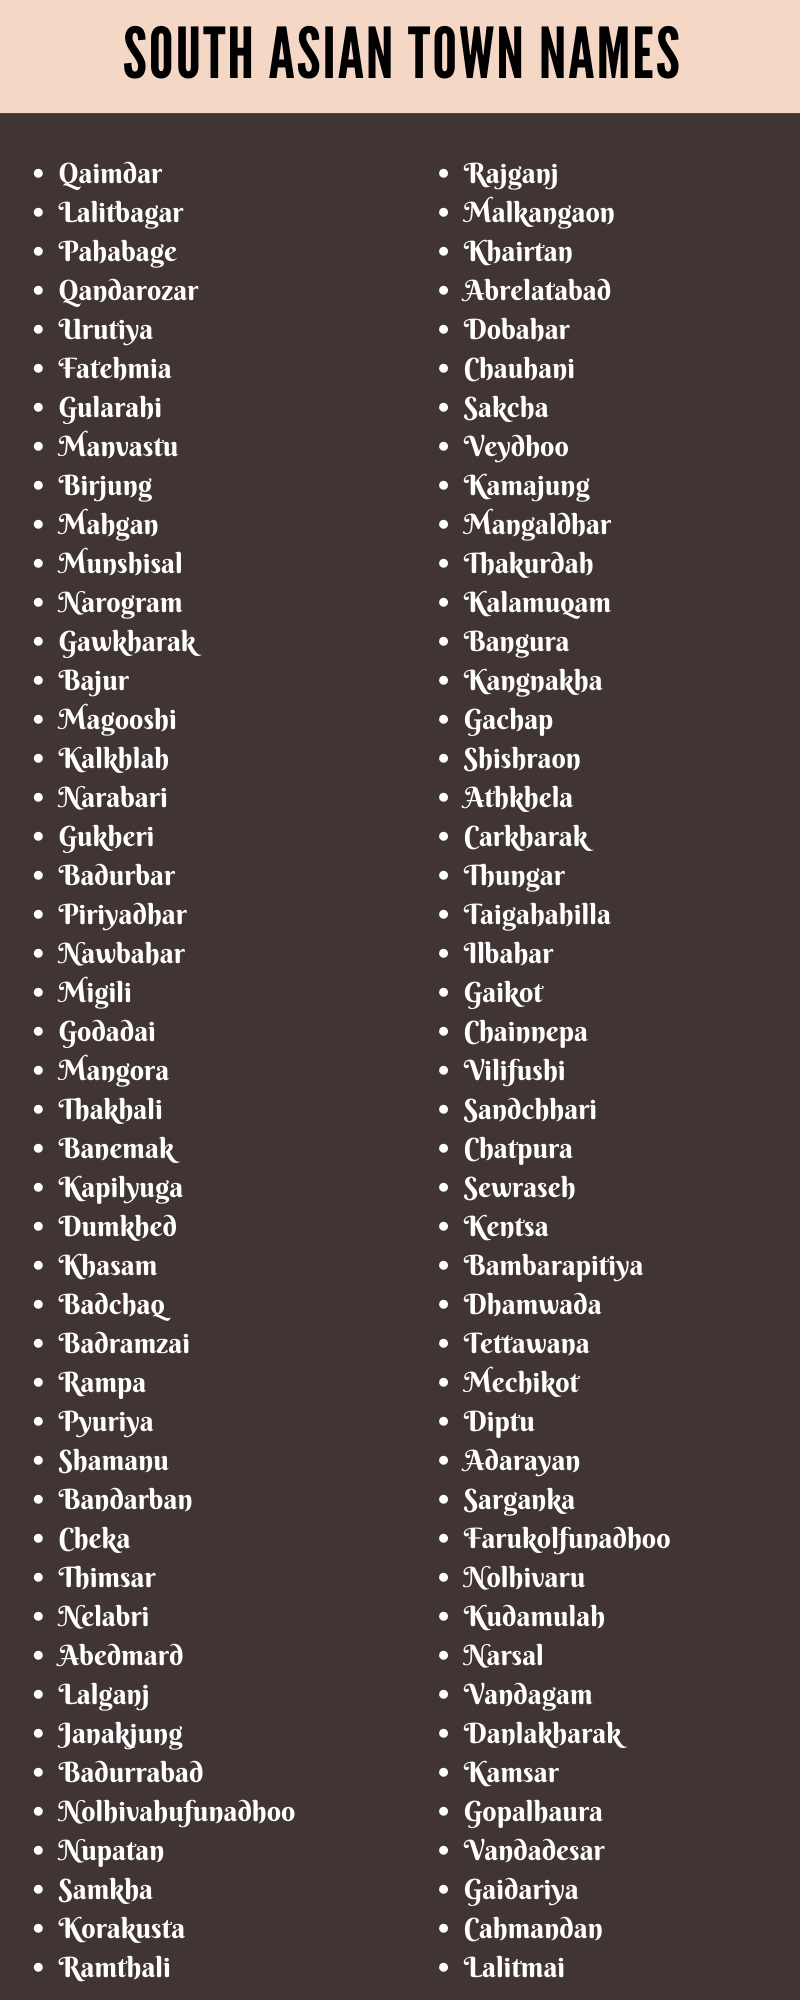 South Asian Town Names